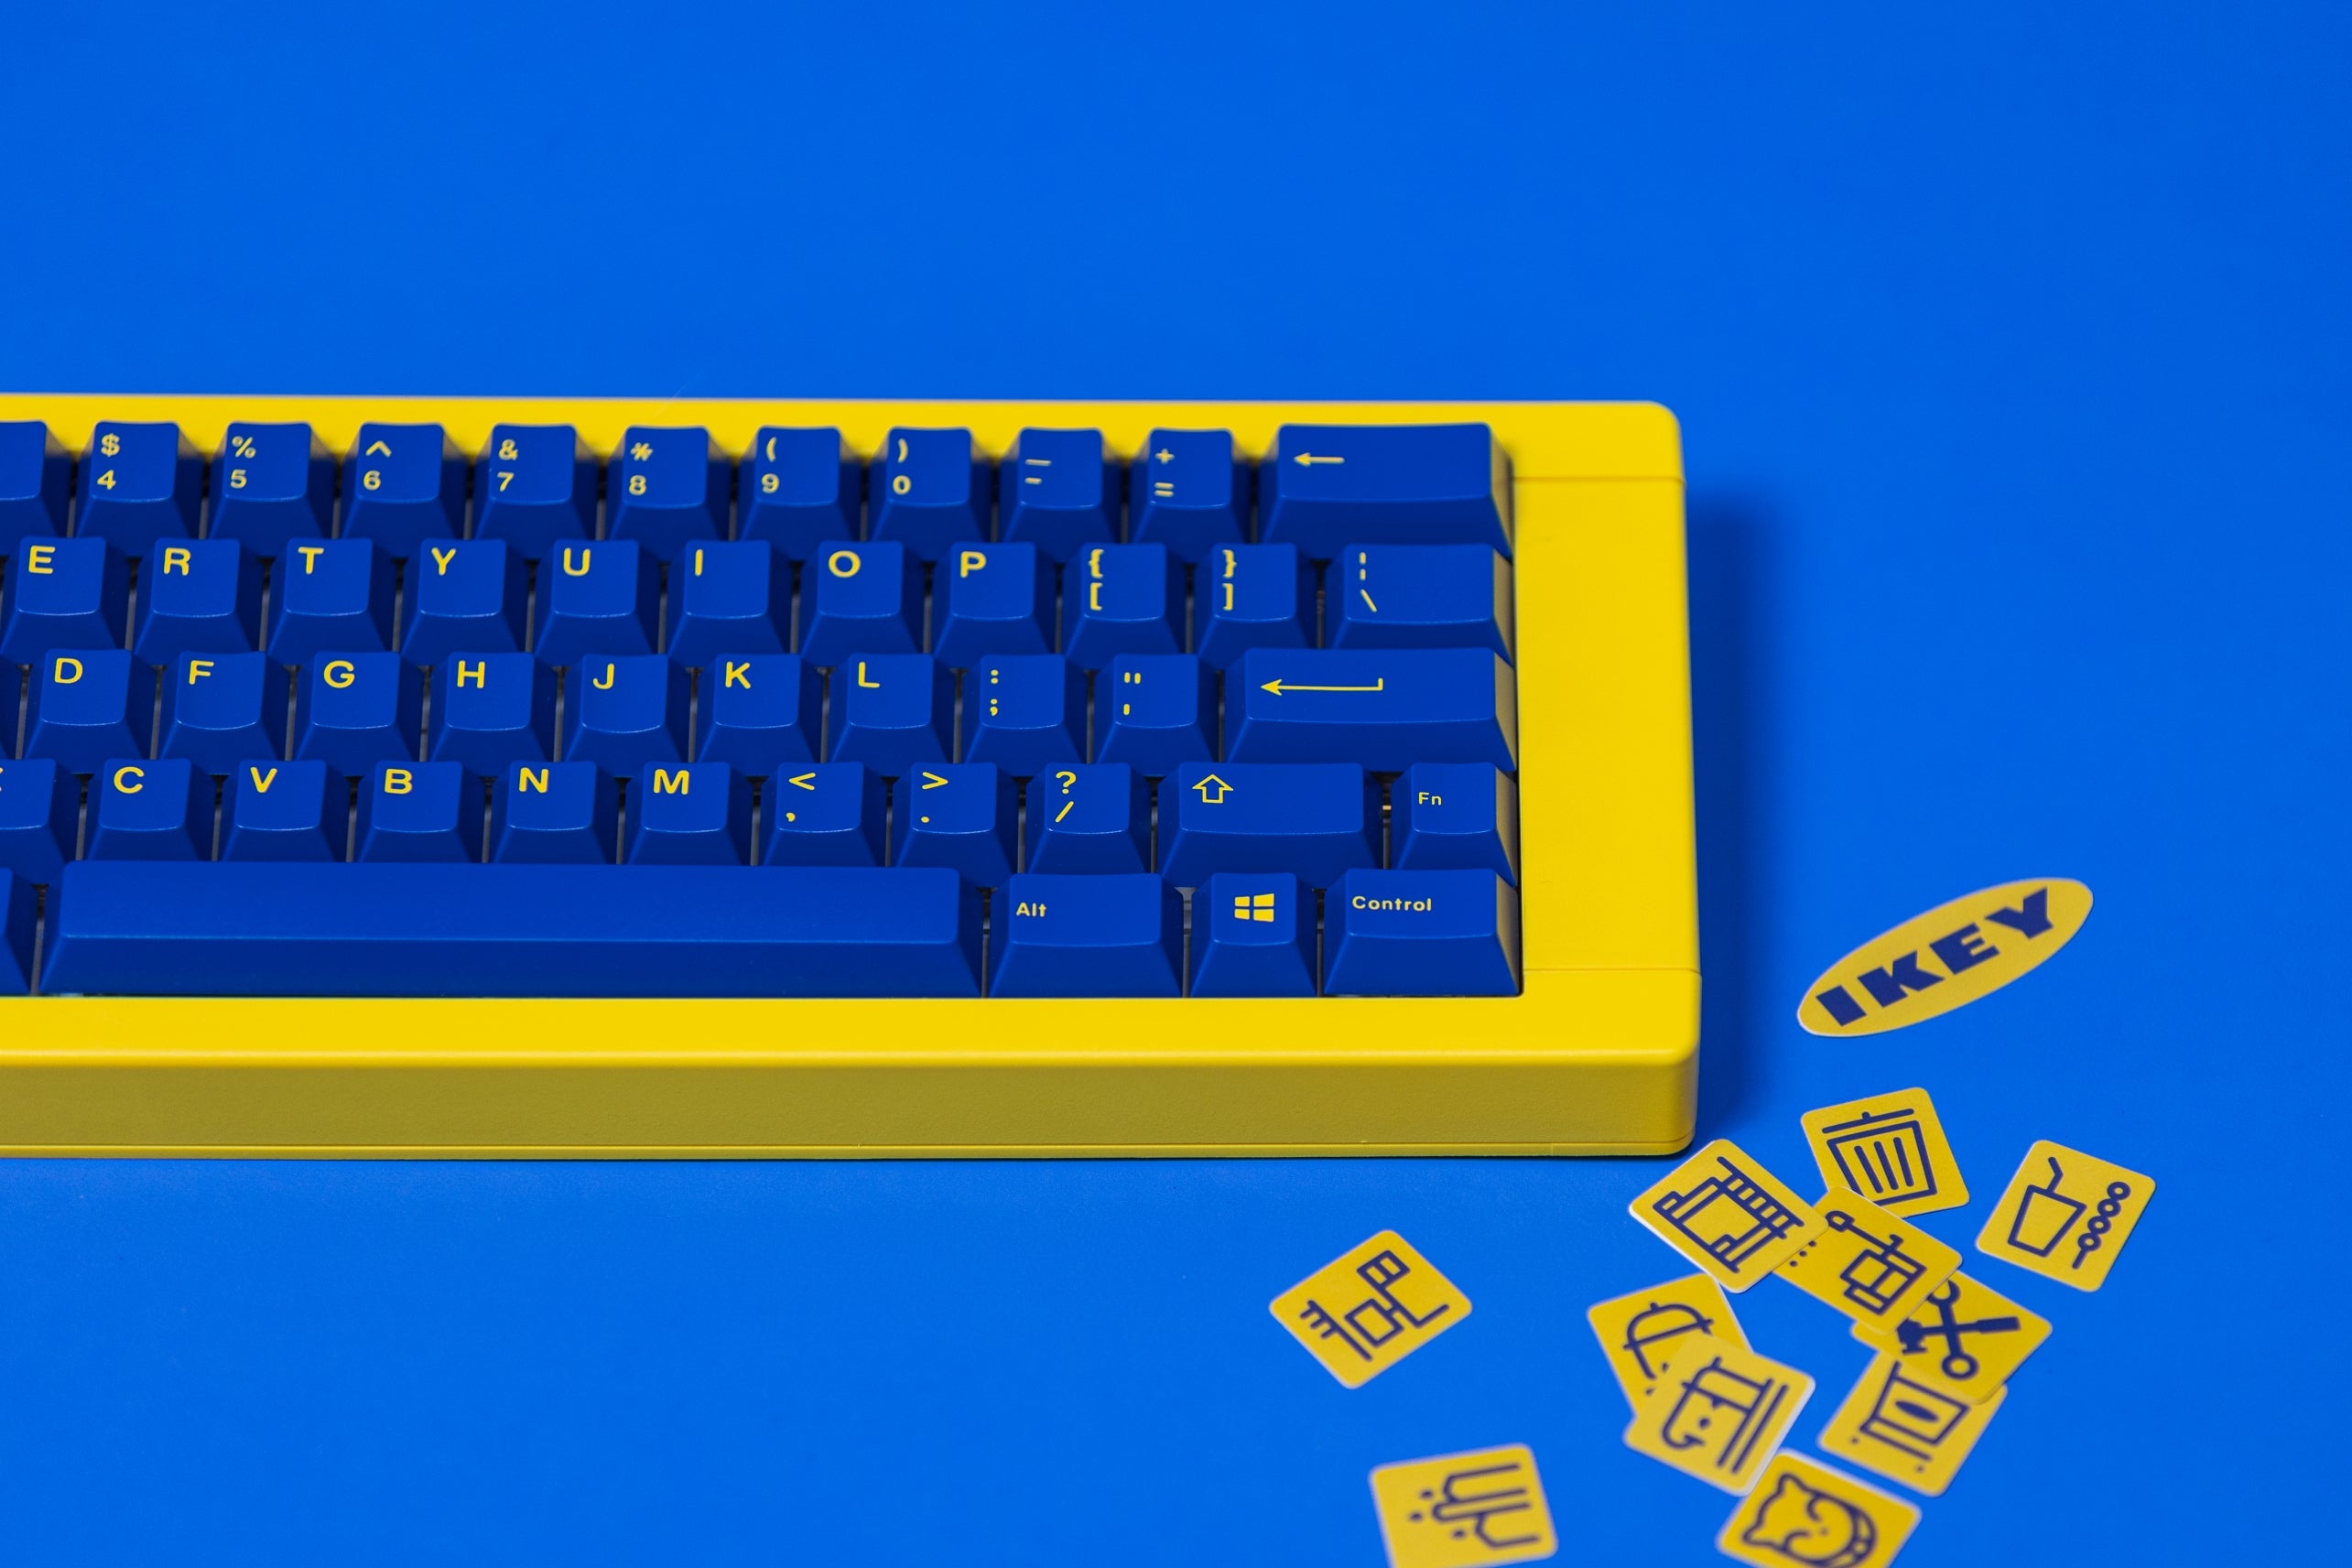 [In Stock] BBOX60 iKey Yellow & Blue PreBuilt Ready-to-use Keyboard